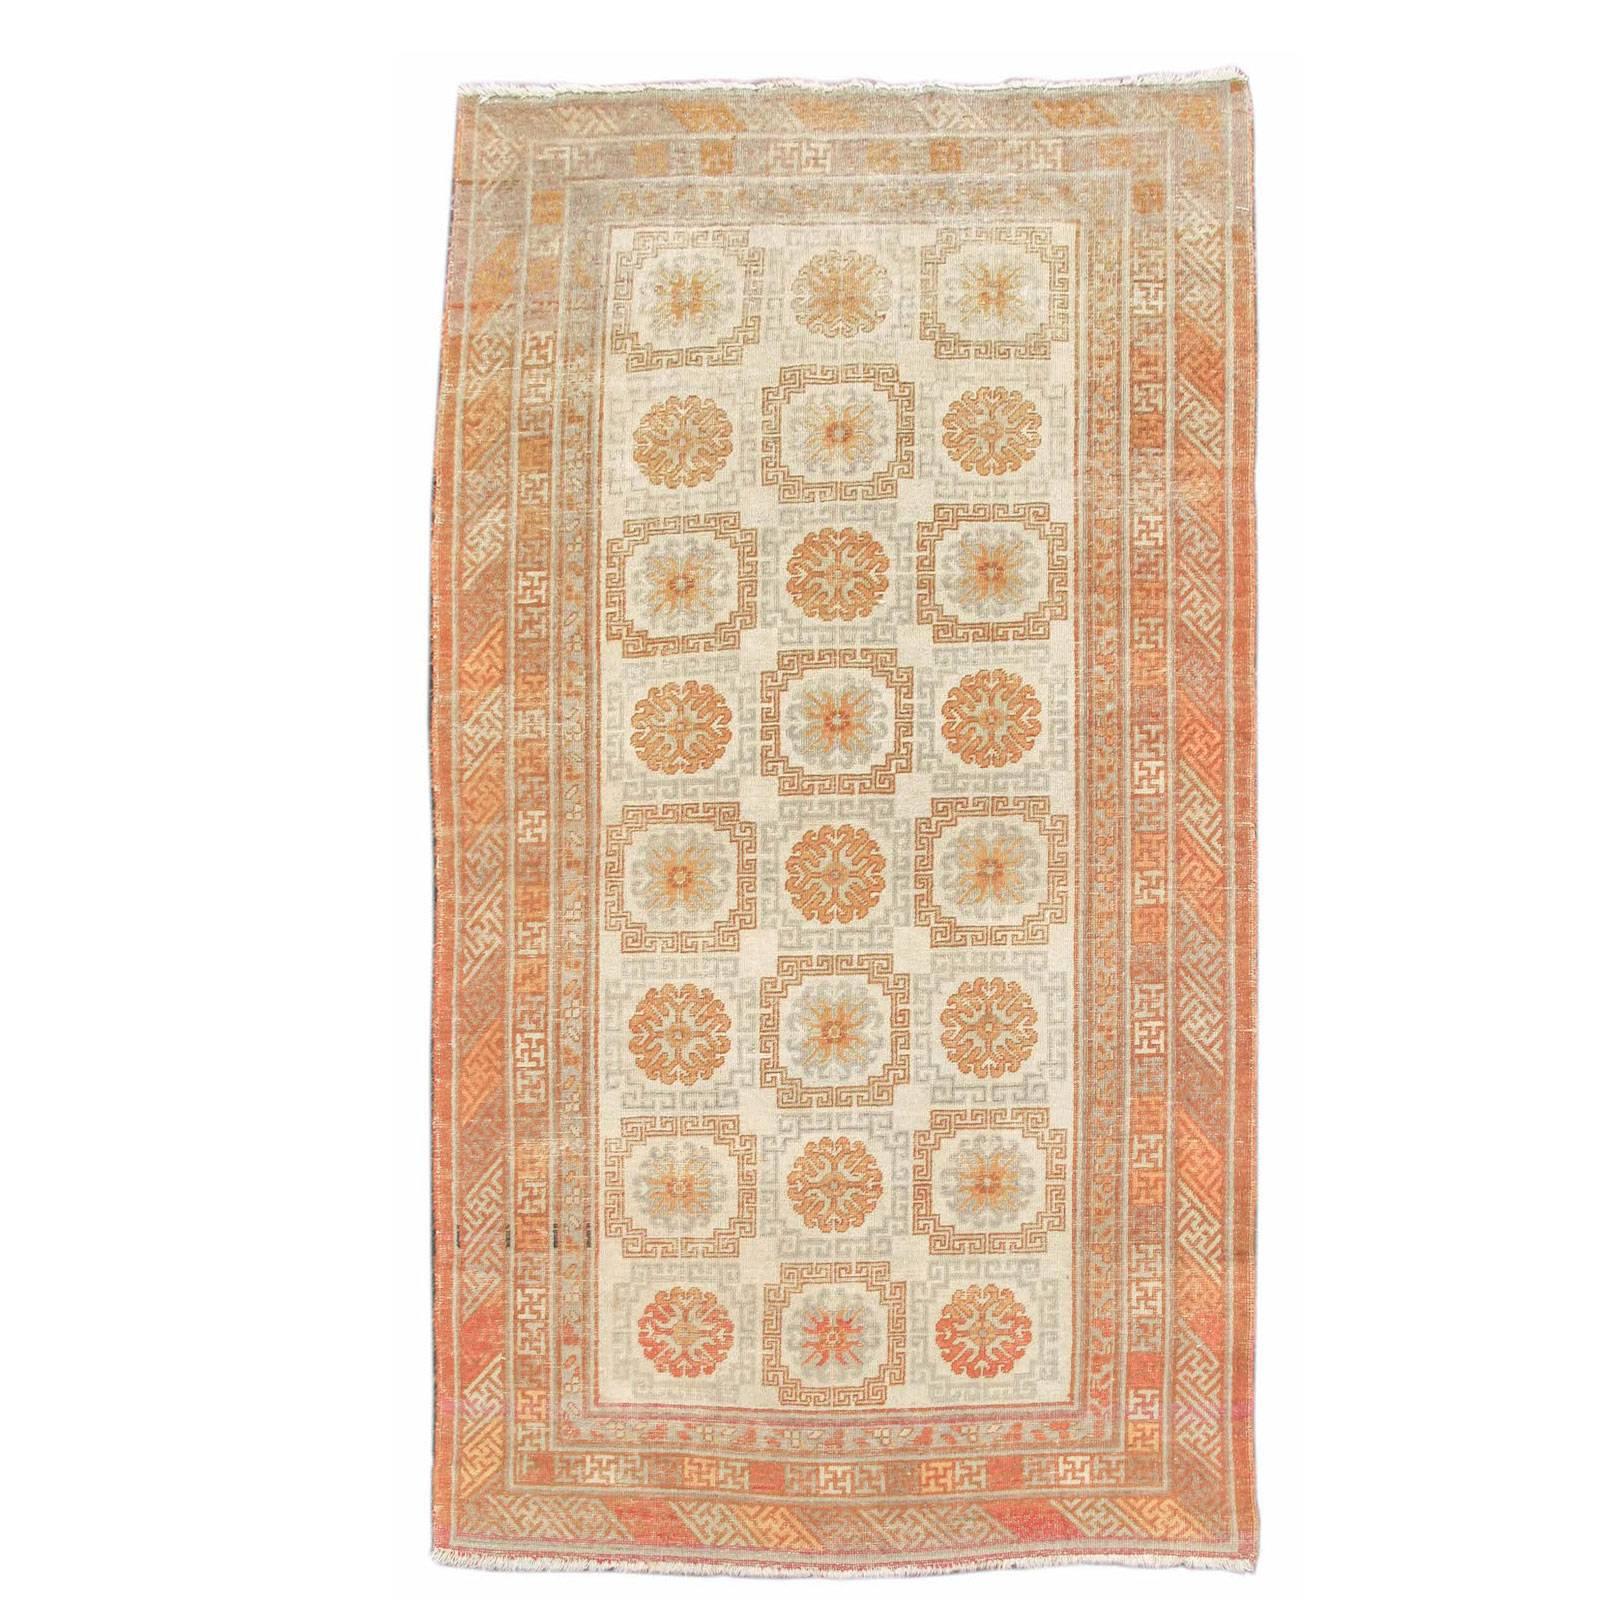 Early 20th Century Light Chinese Khotan Carpet